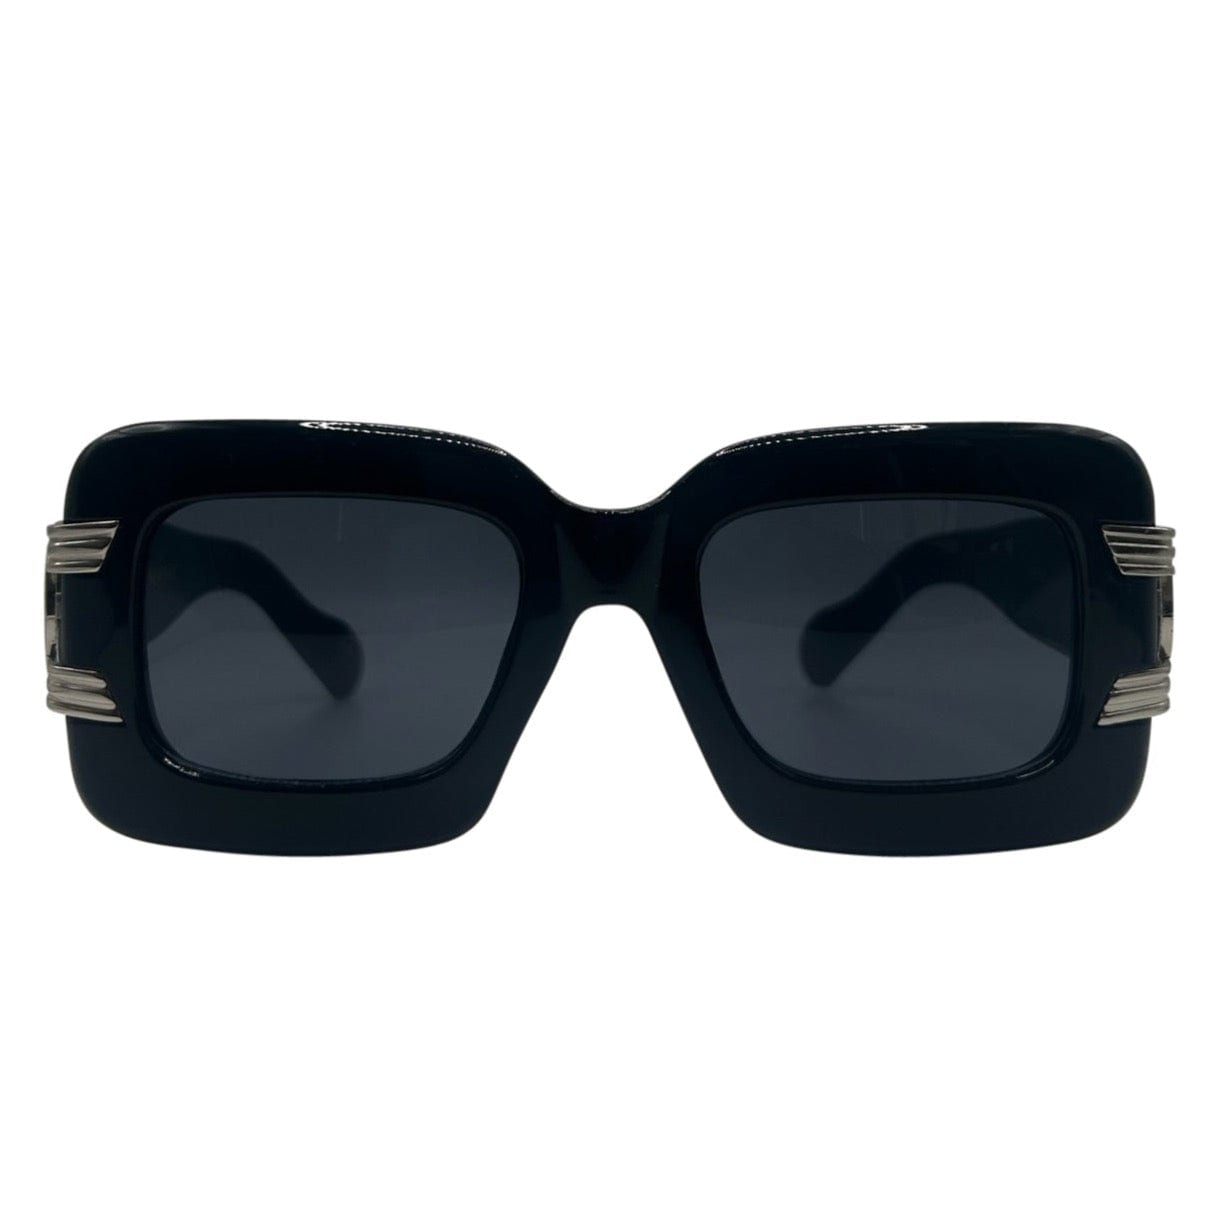 SMASH Black/Silver Oversized Sunglasses